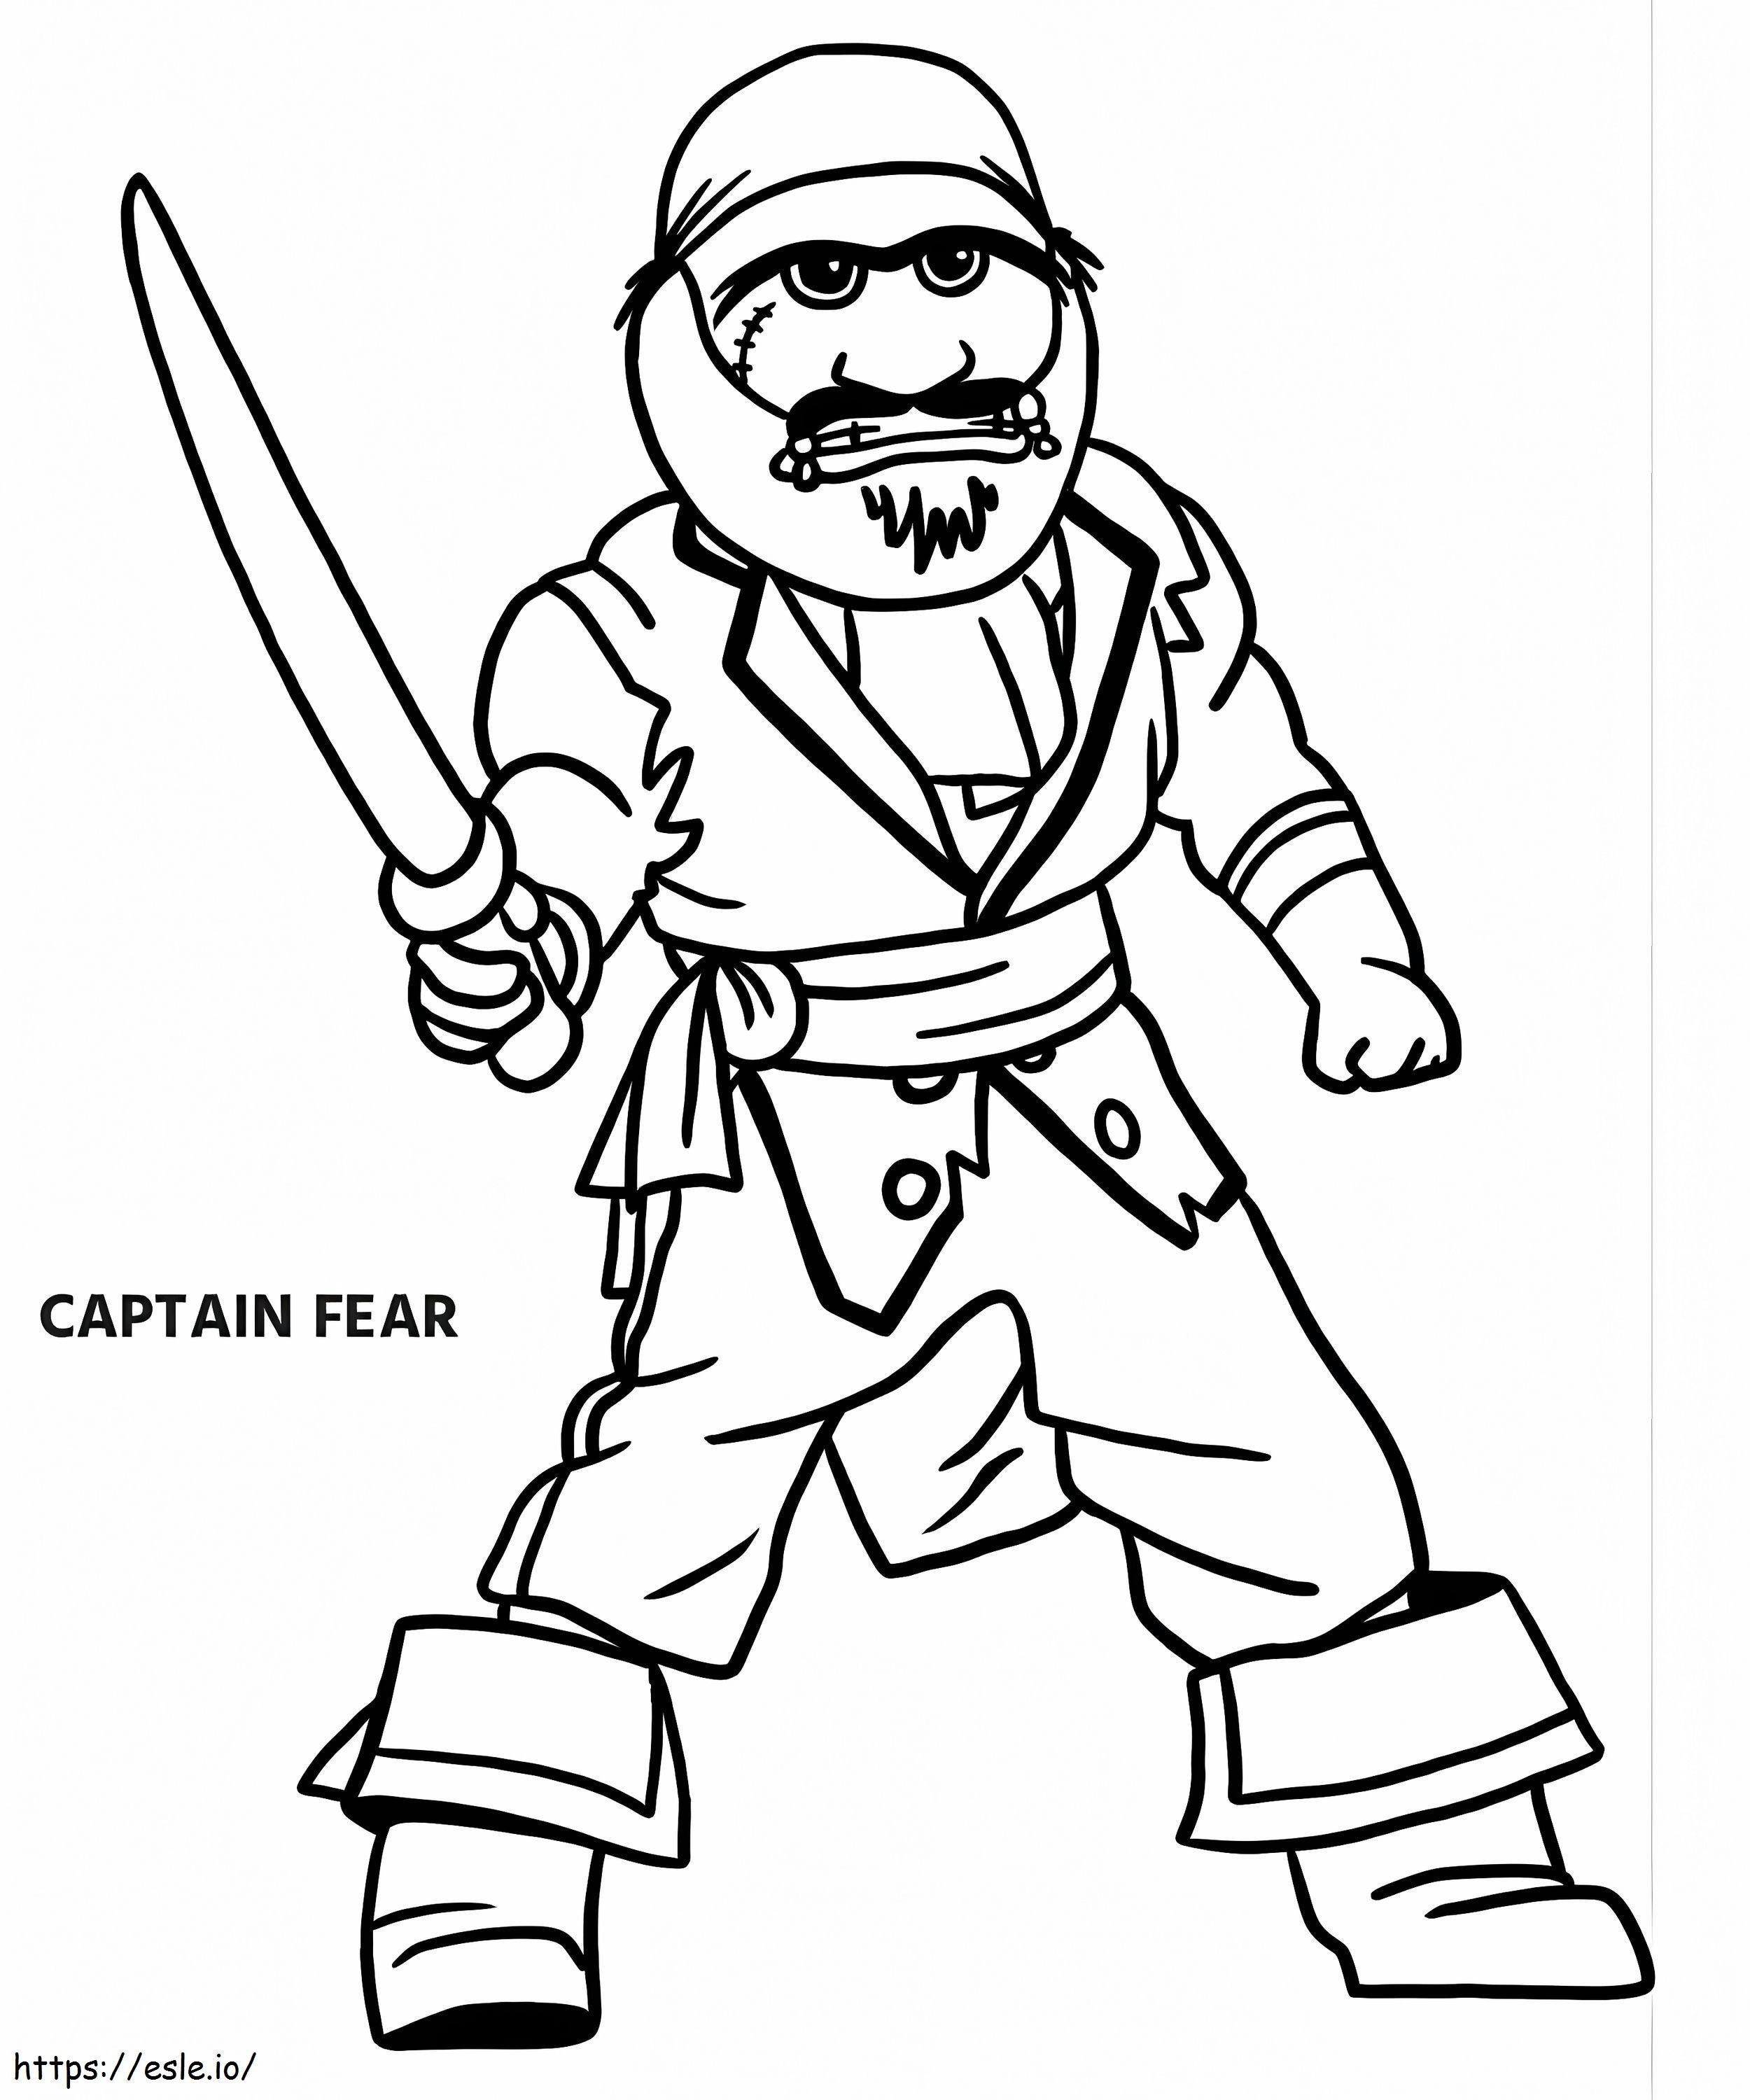 Captain Fear coloring page